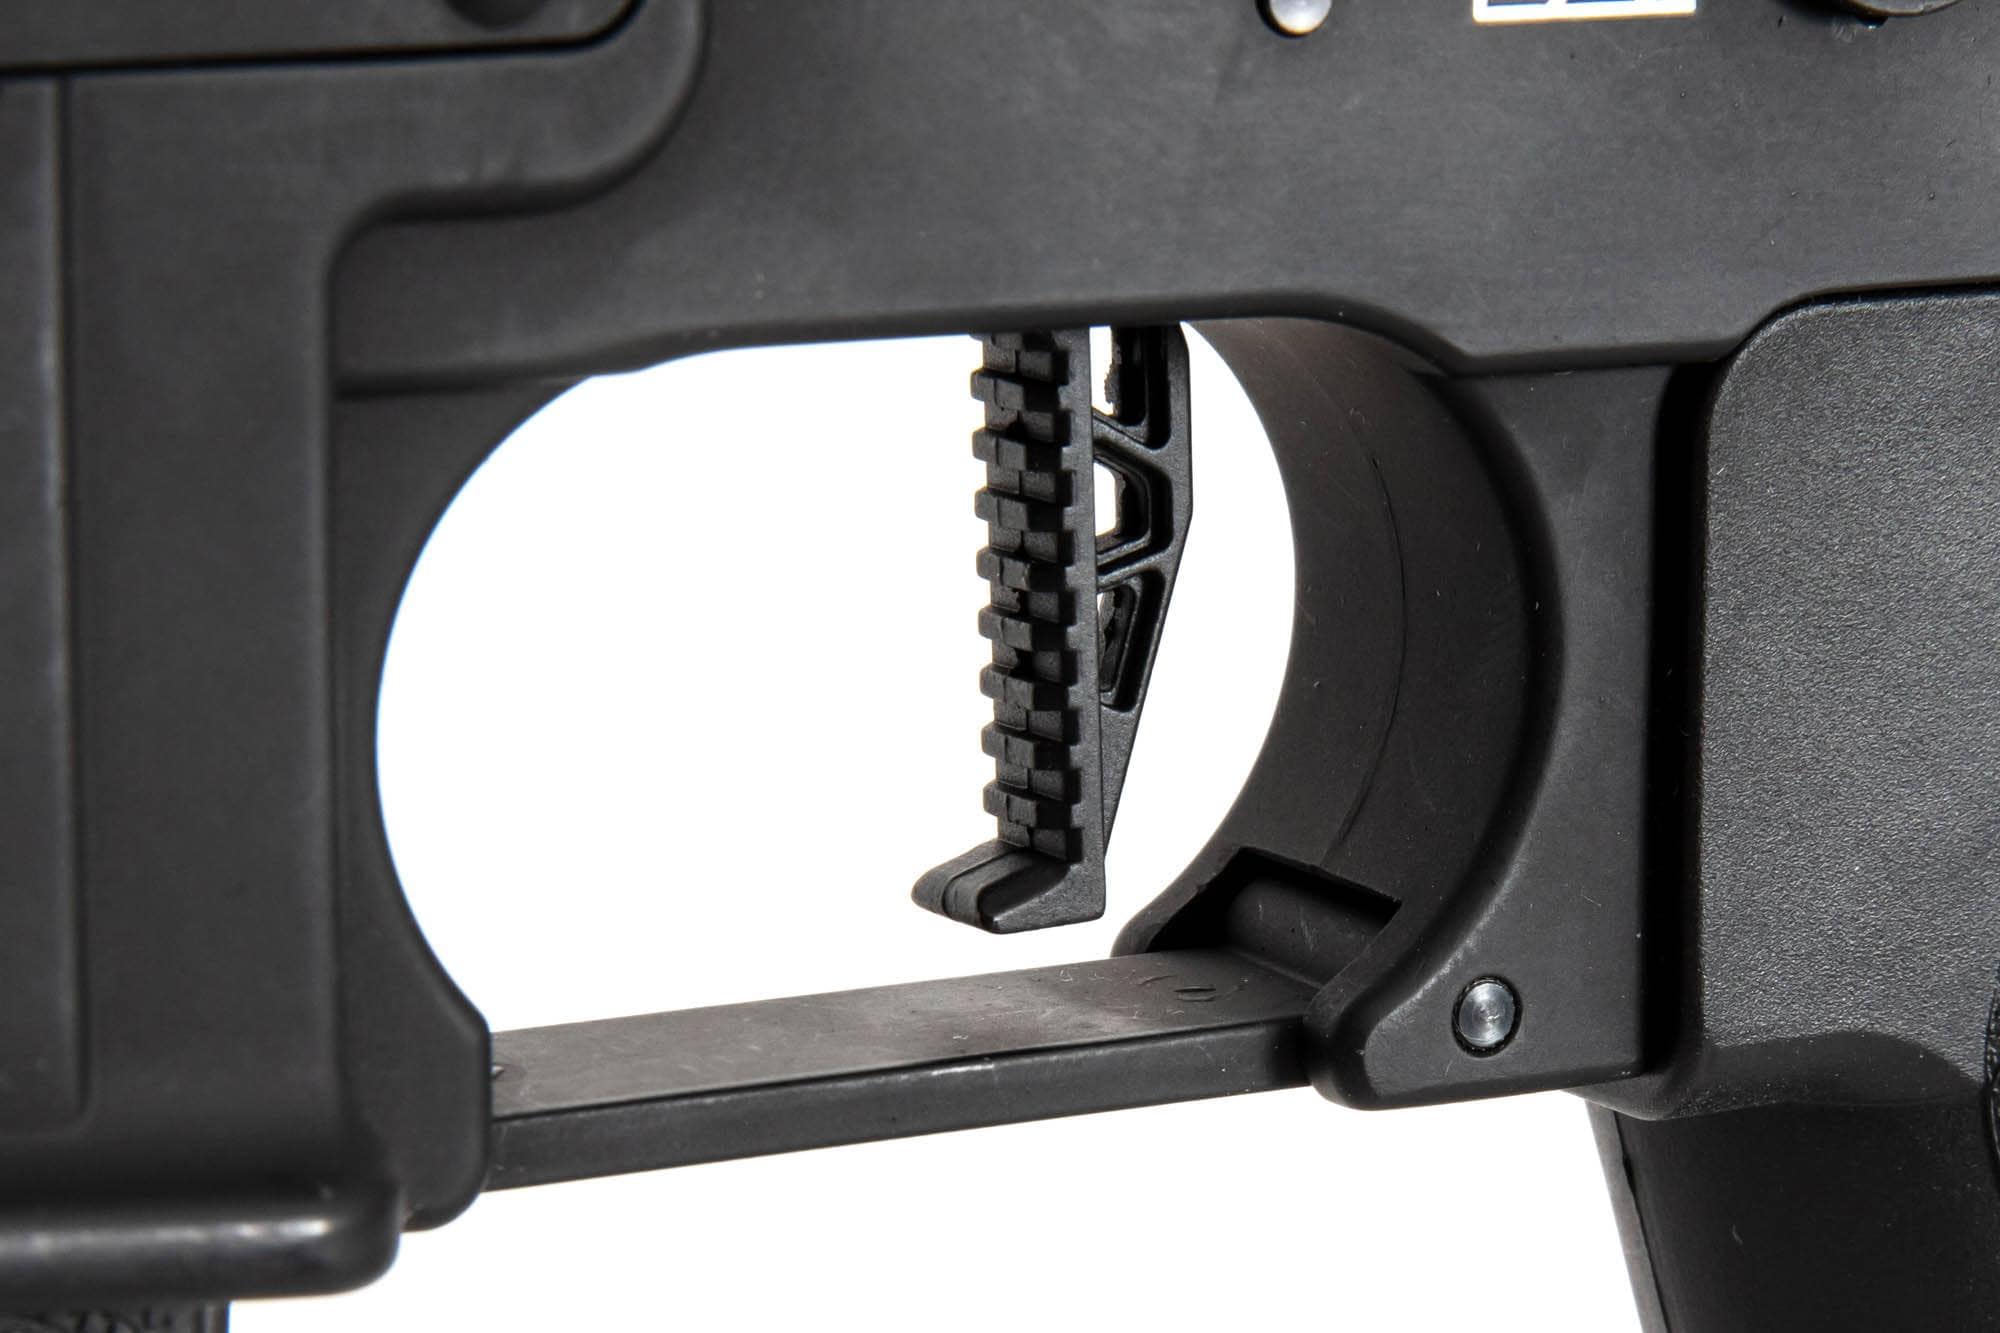 Karabinek szturmowy AEG Specna Arms SA-H23 Edge 2.0 - czarny 